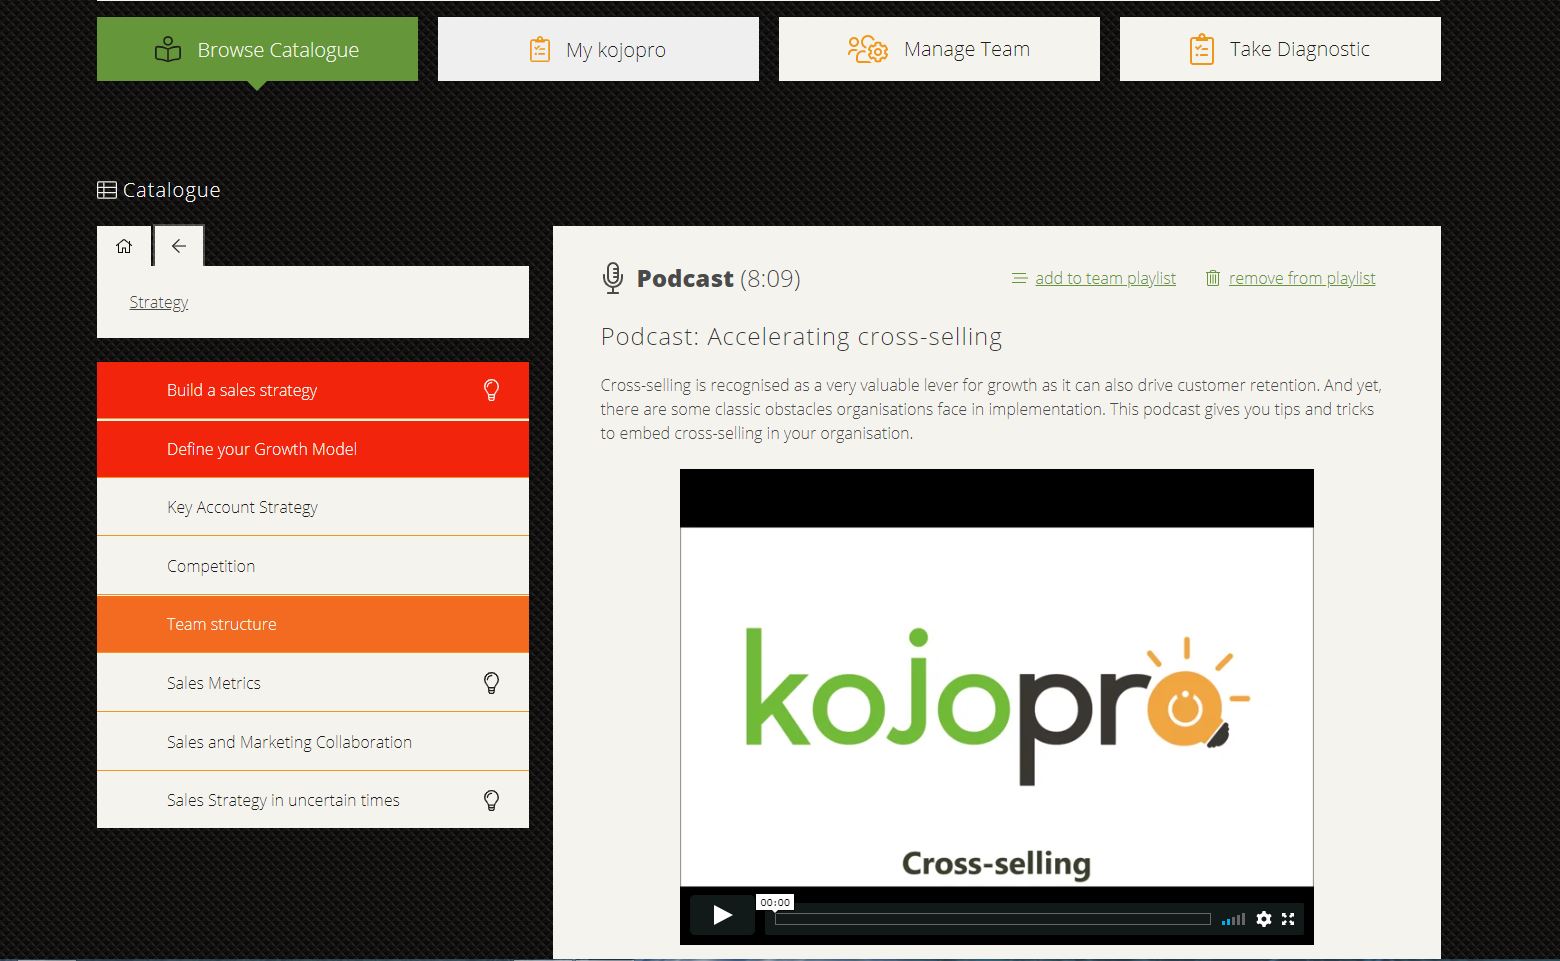 Kojopro sales leadership development platform